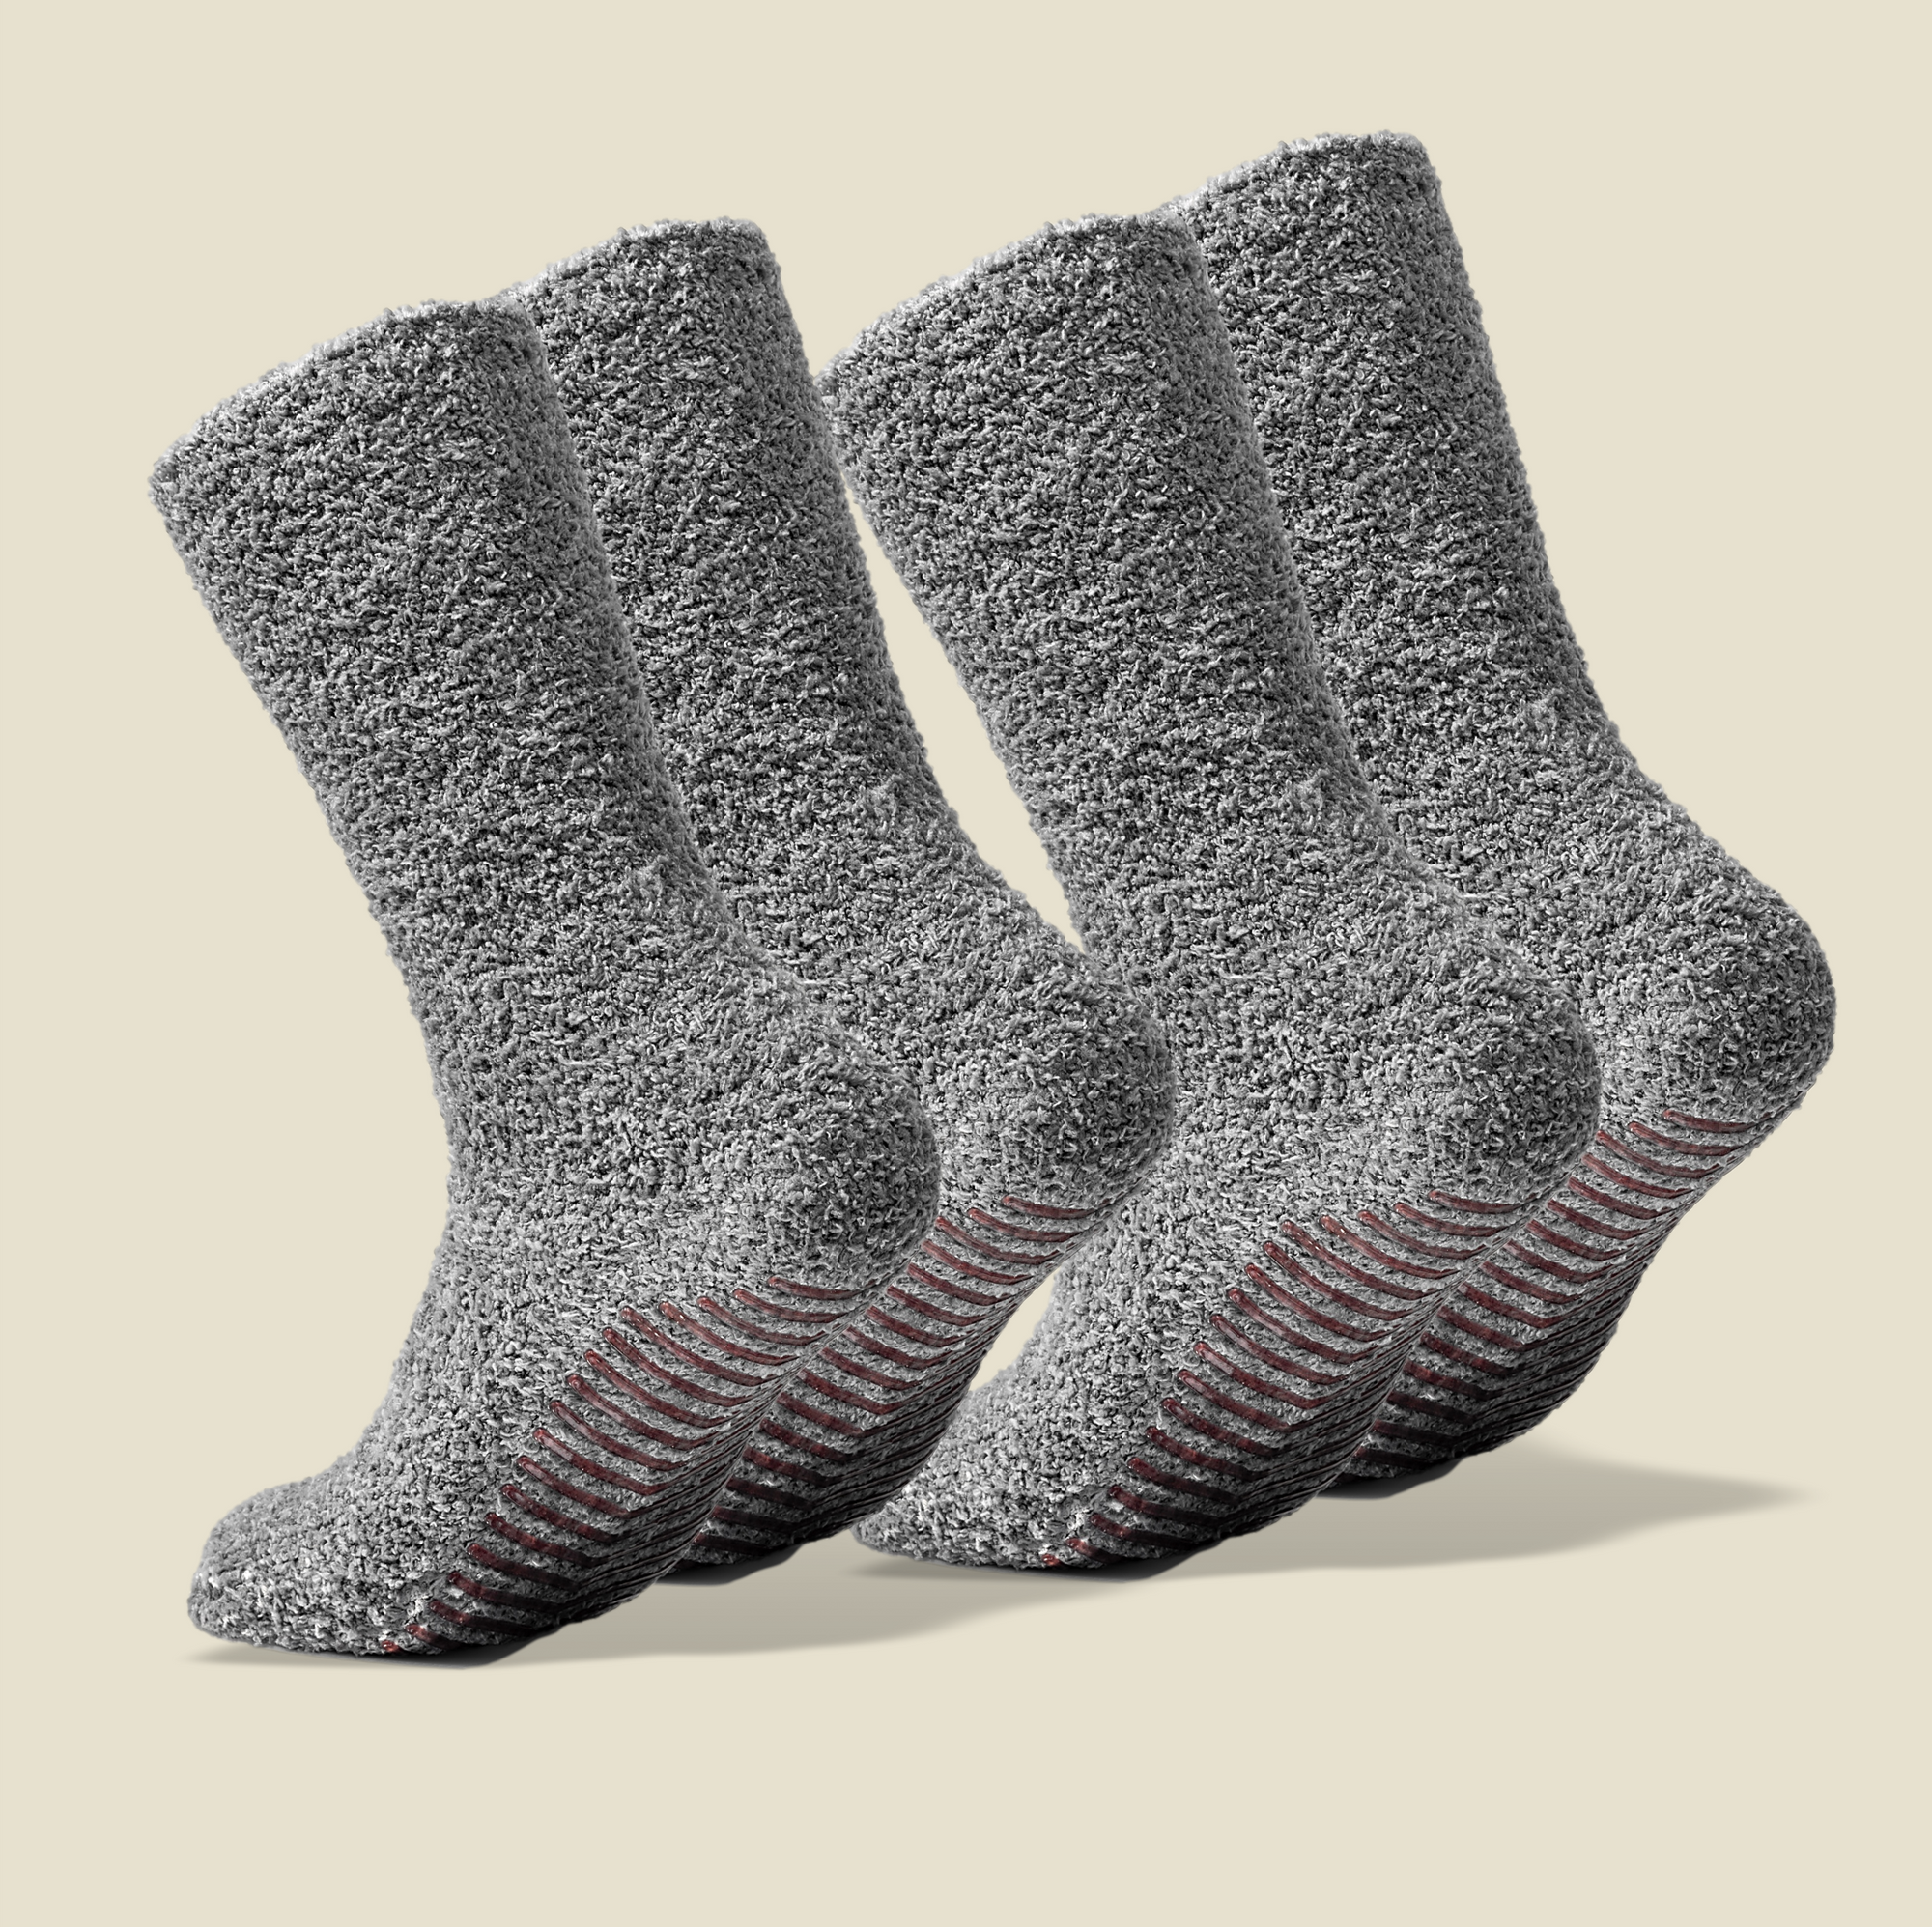 Light Grey Fuzzy Socks with Grips for Men x2 Pairs - Gripjoy Socks